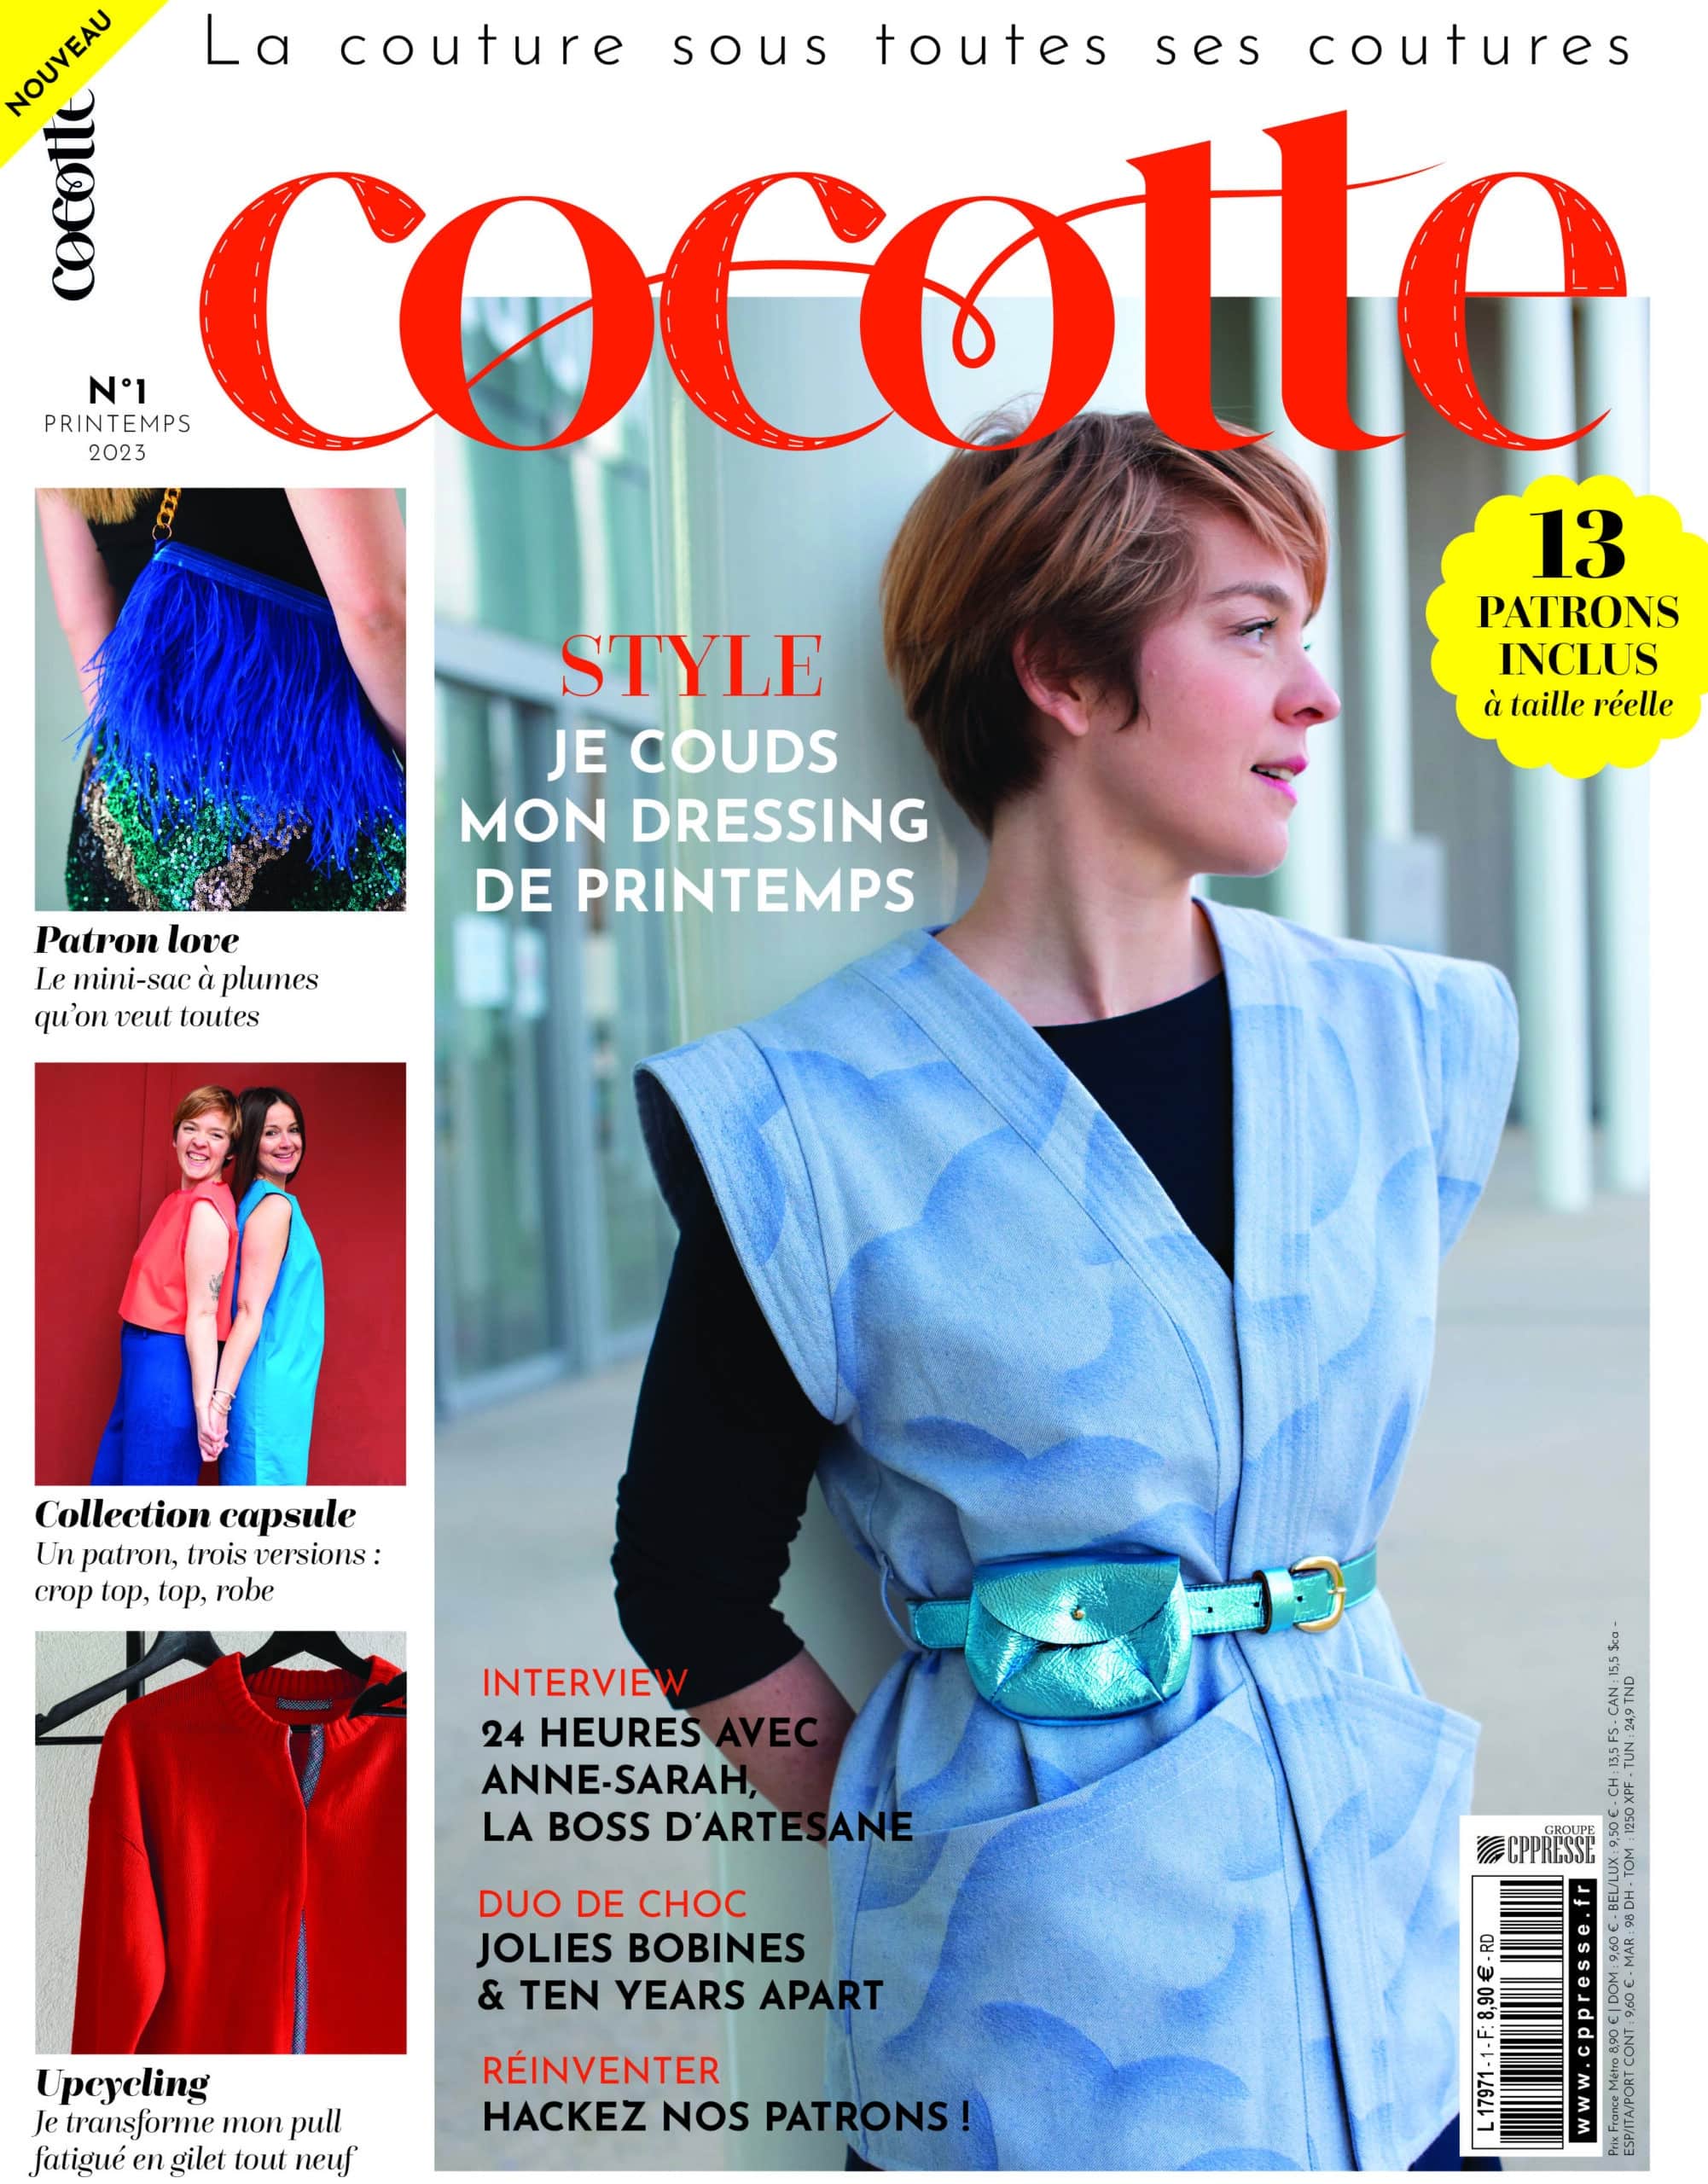 Cocotte Magazine